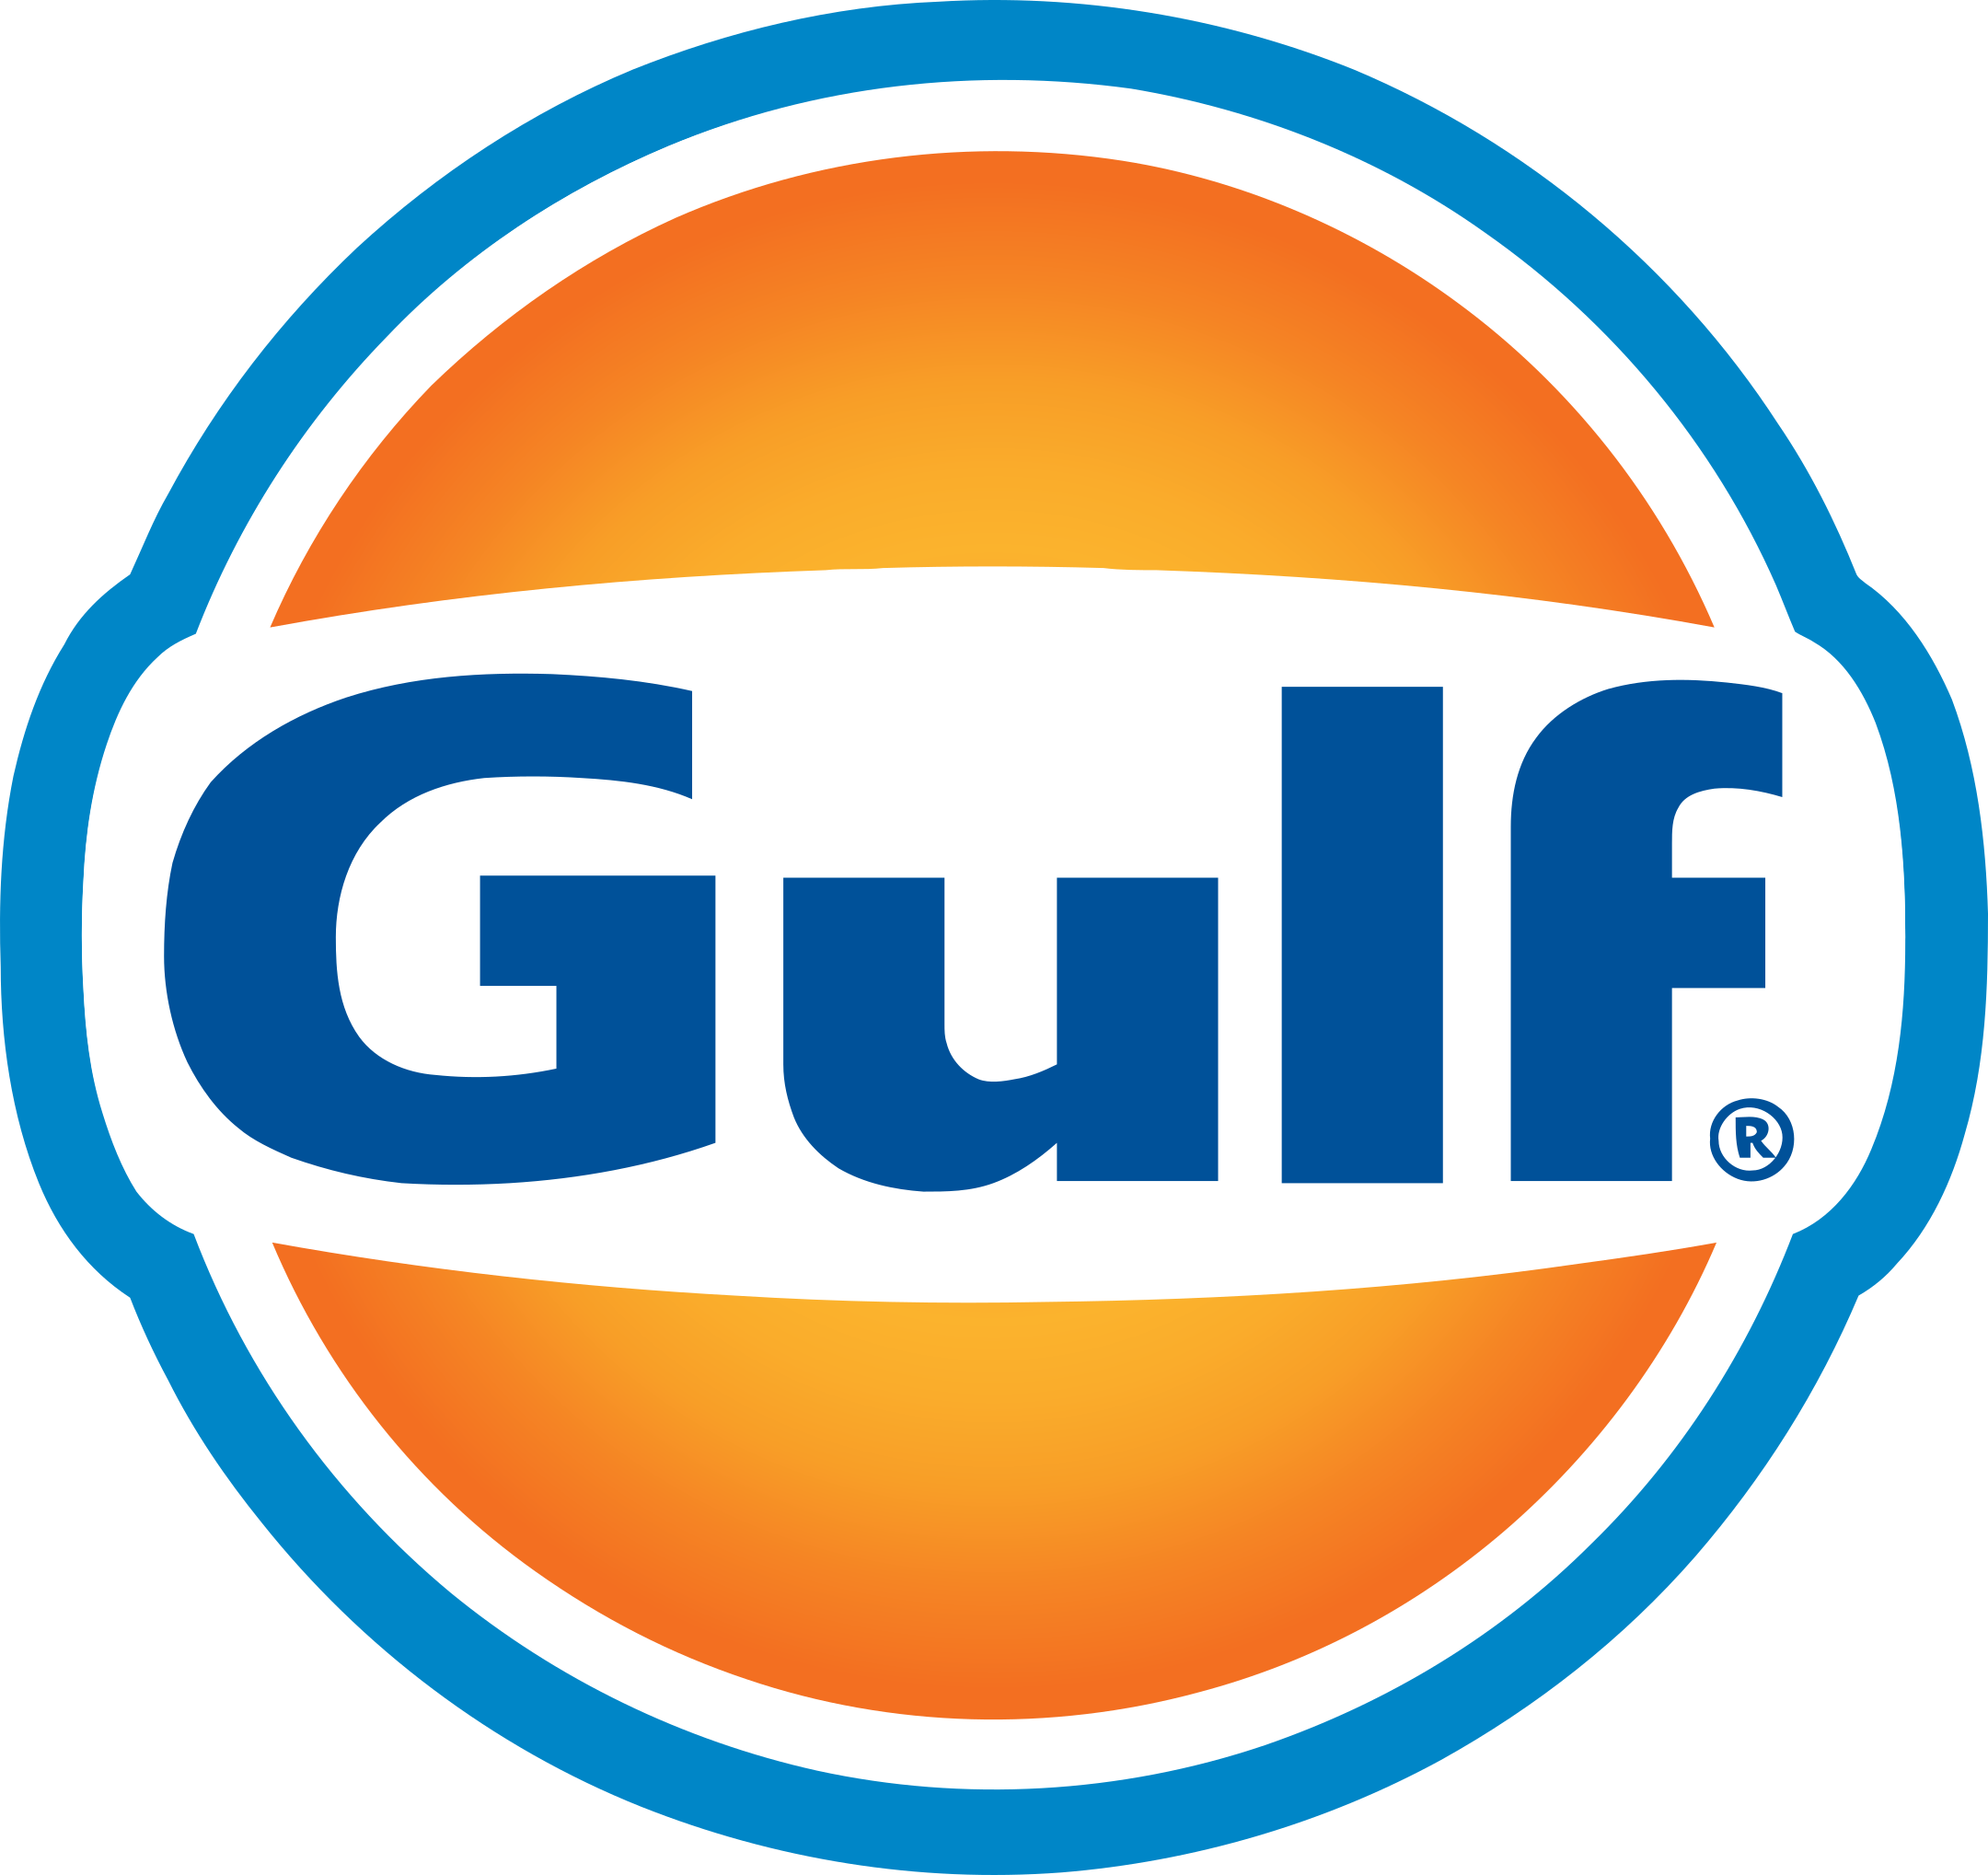 gulf logo 1 - Gulf Oil Logo